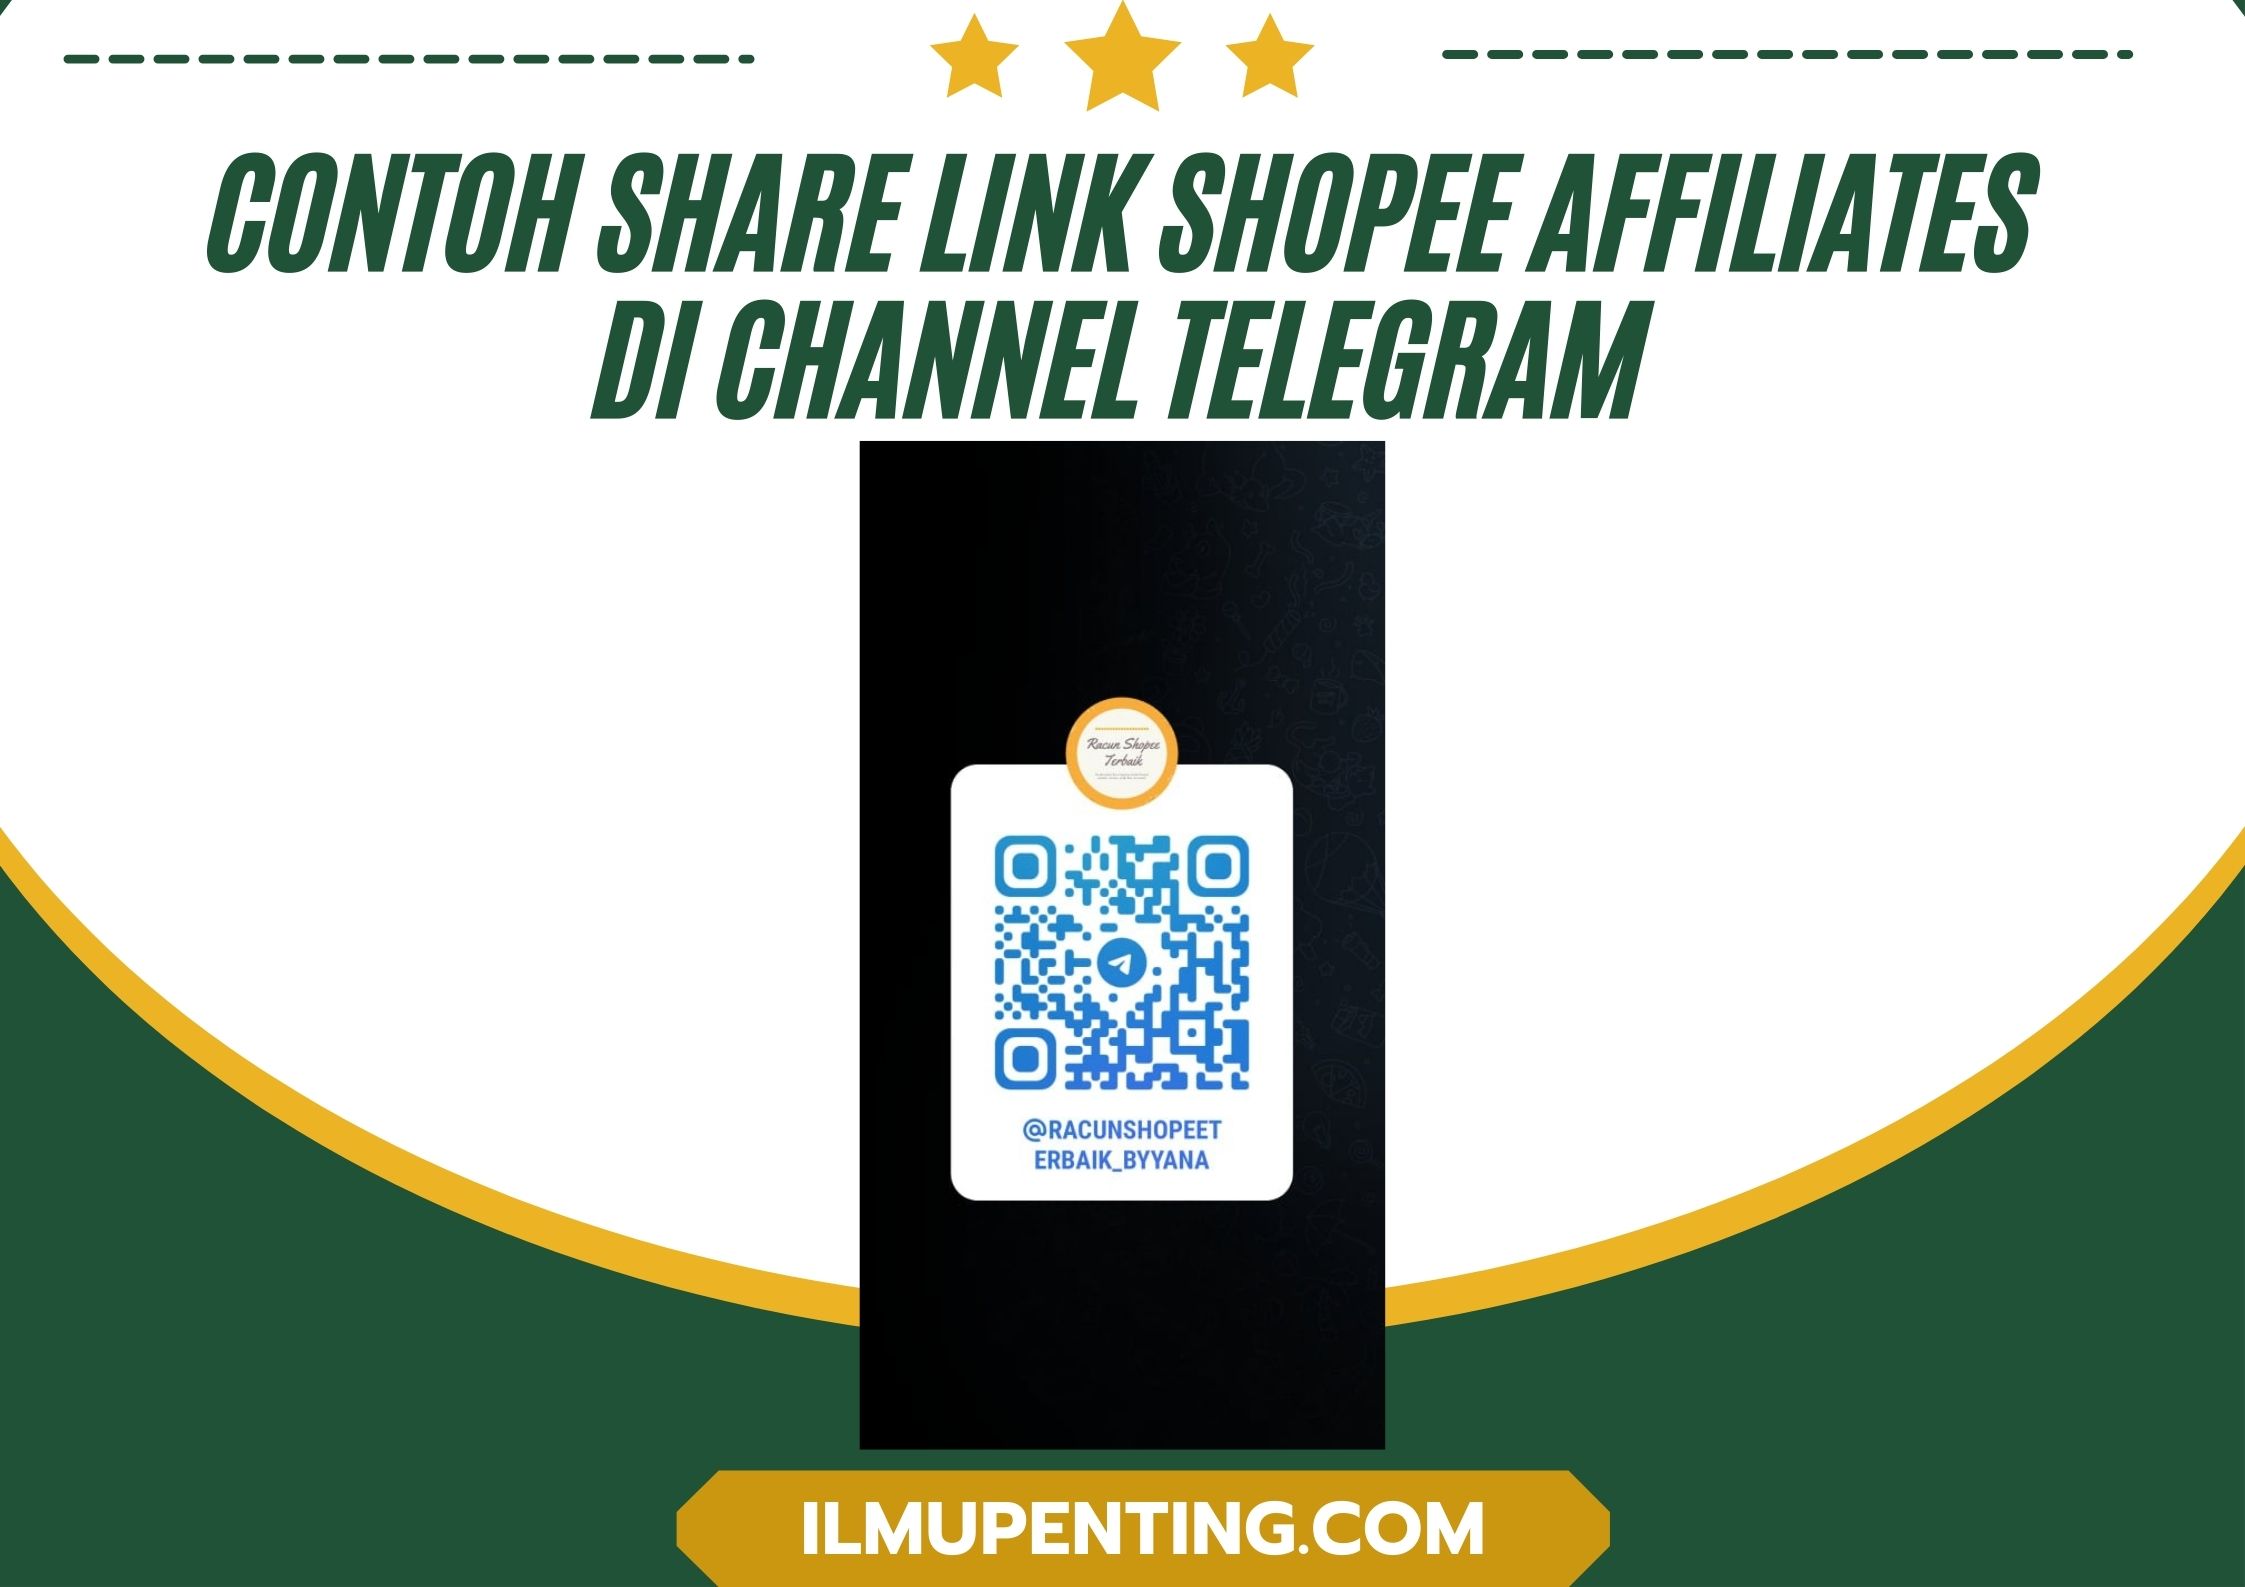 Contoh Share Link Shopee Affiliates di Channel Telegram